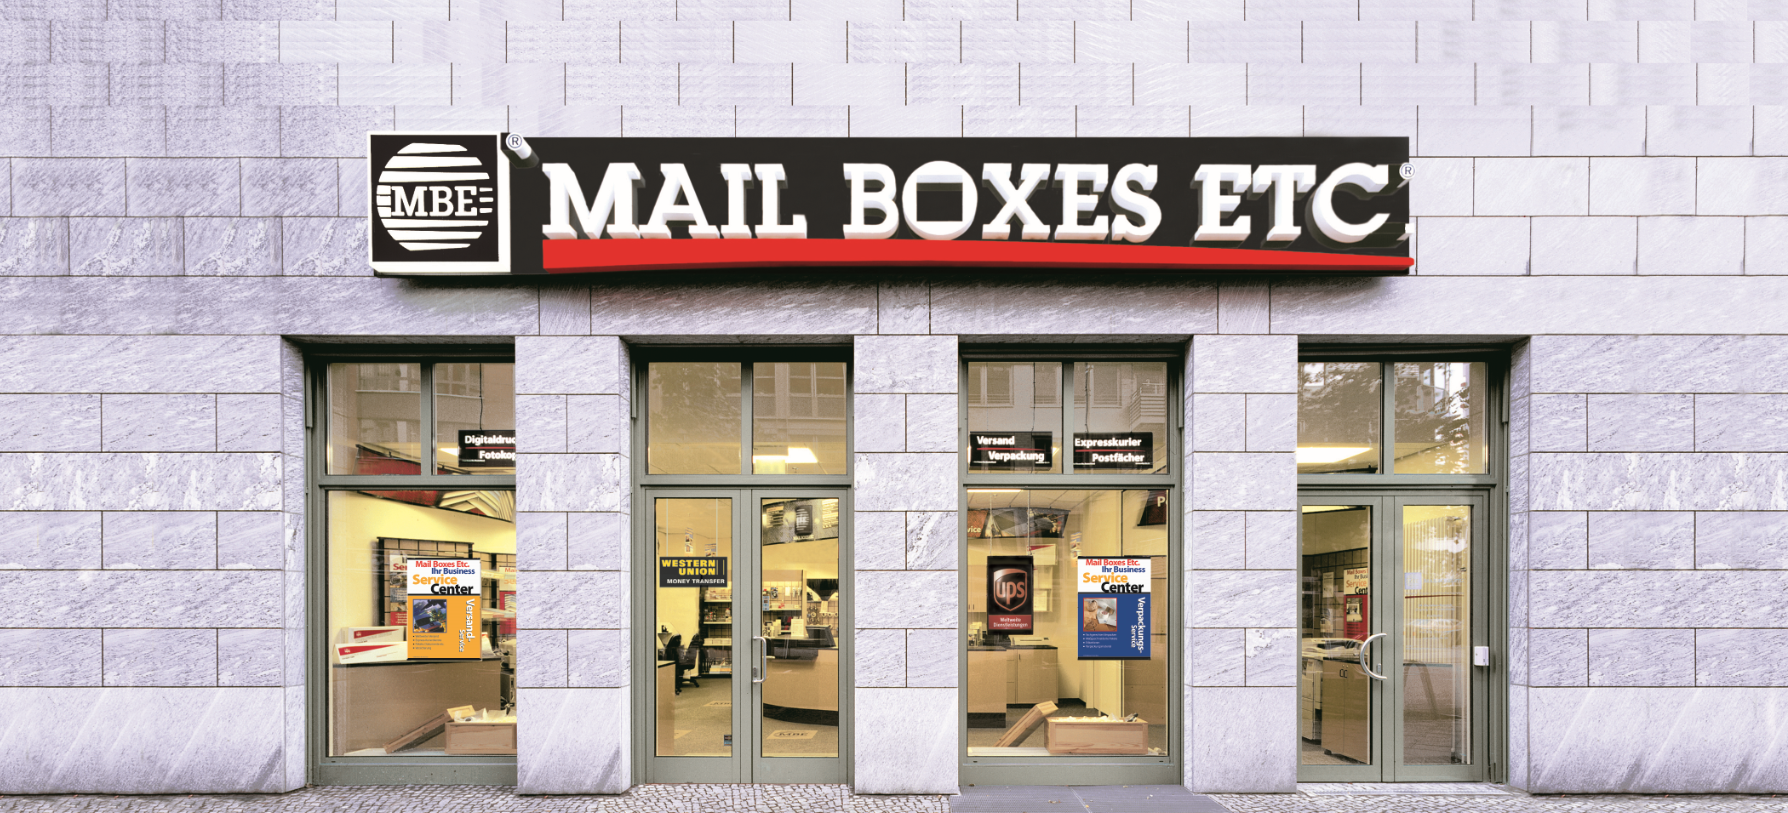 Mail Boxes Etc. - Center MBE 0066, Südstraße 27 in Sankt Augustin